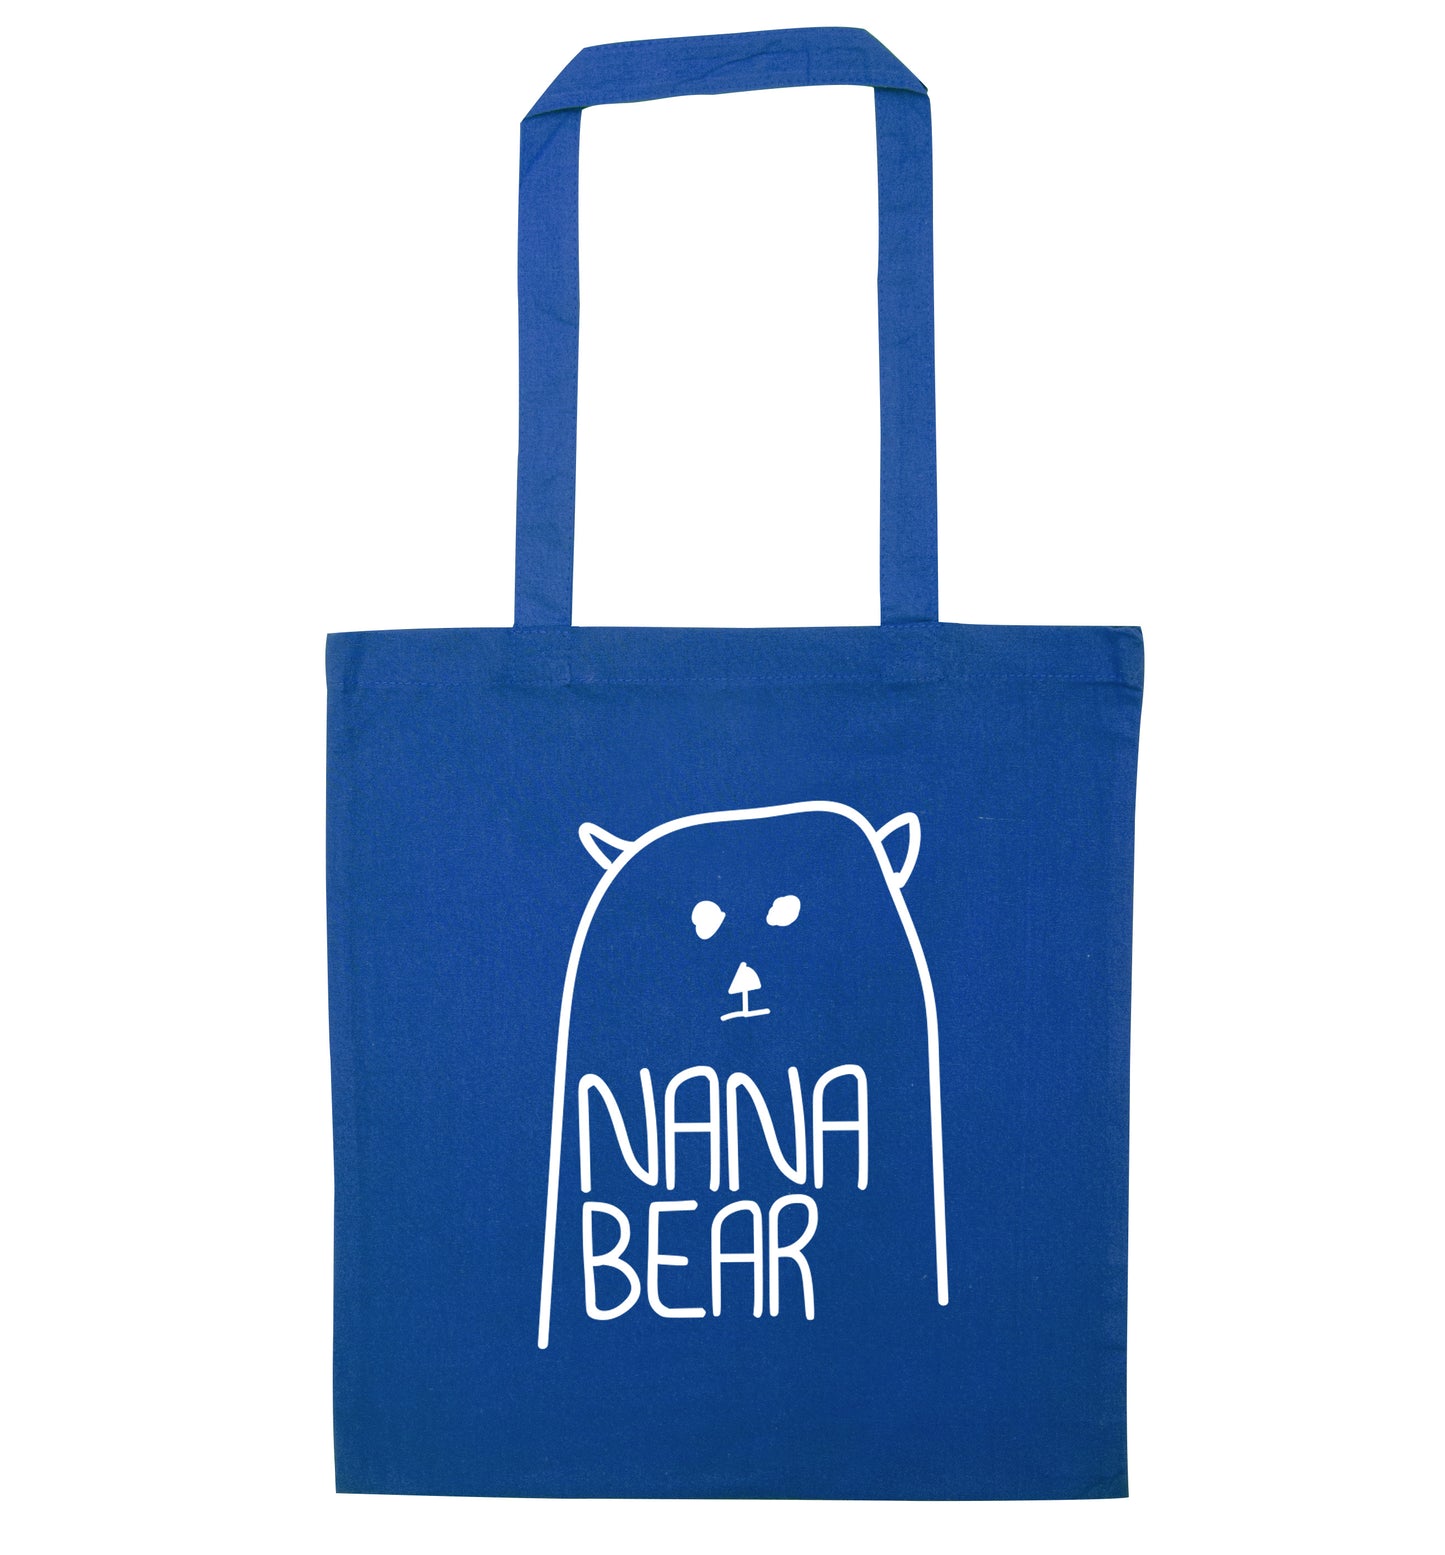 Nana bear blue tote bag